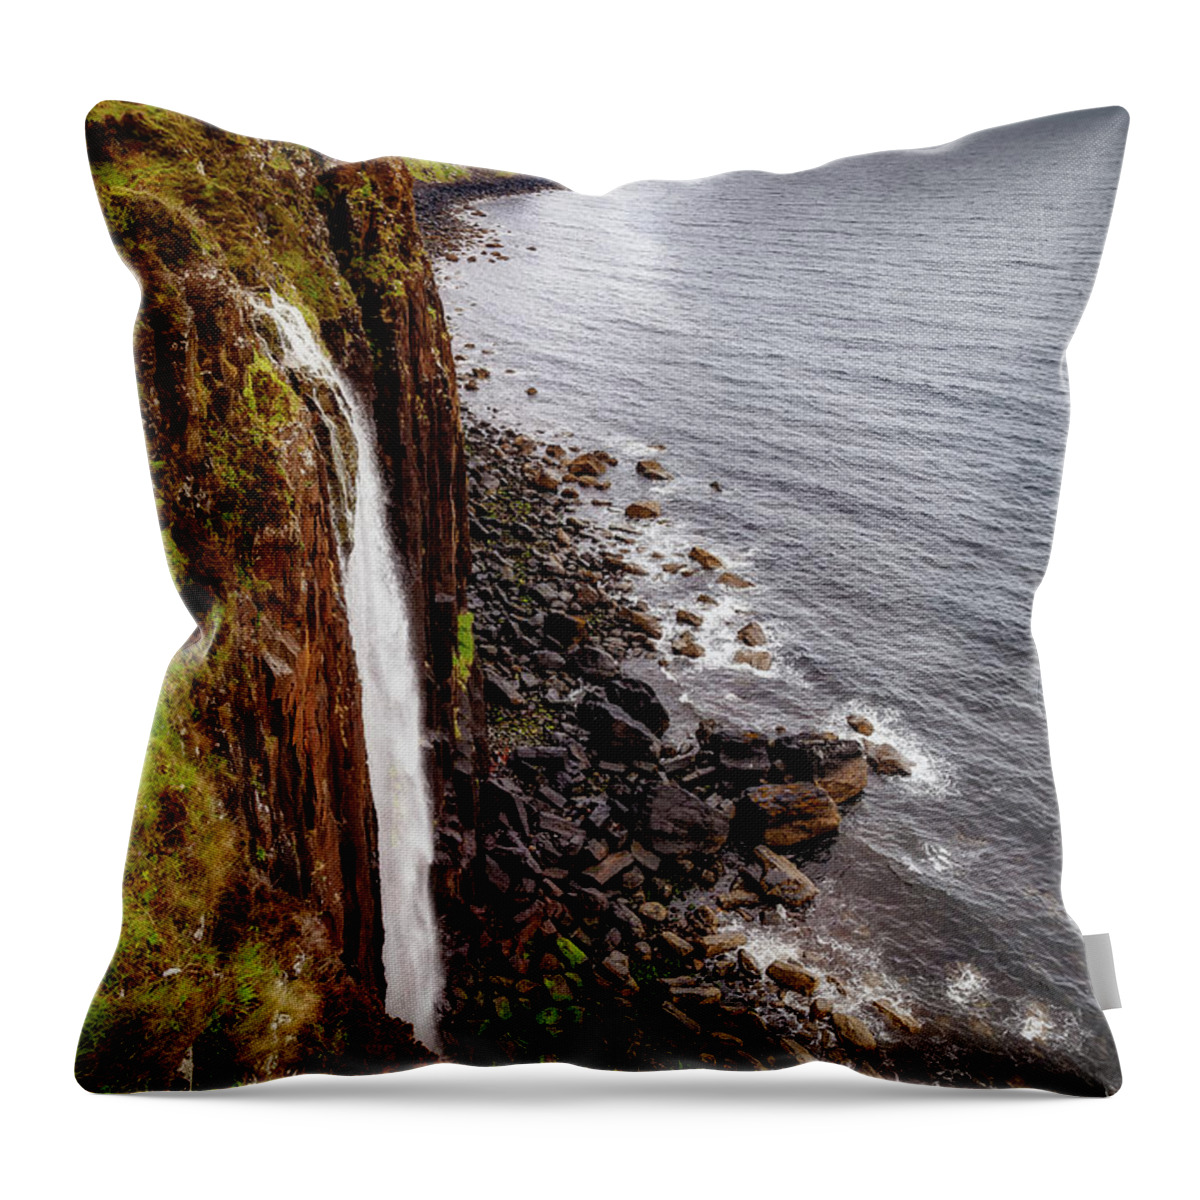 Scotland Throw Pillow featuring the photograph Kilt Rock by Bradley Morris